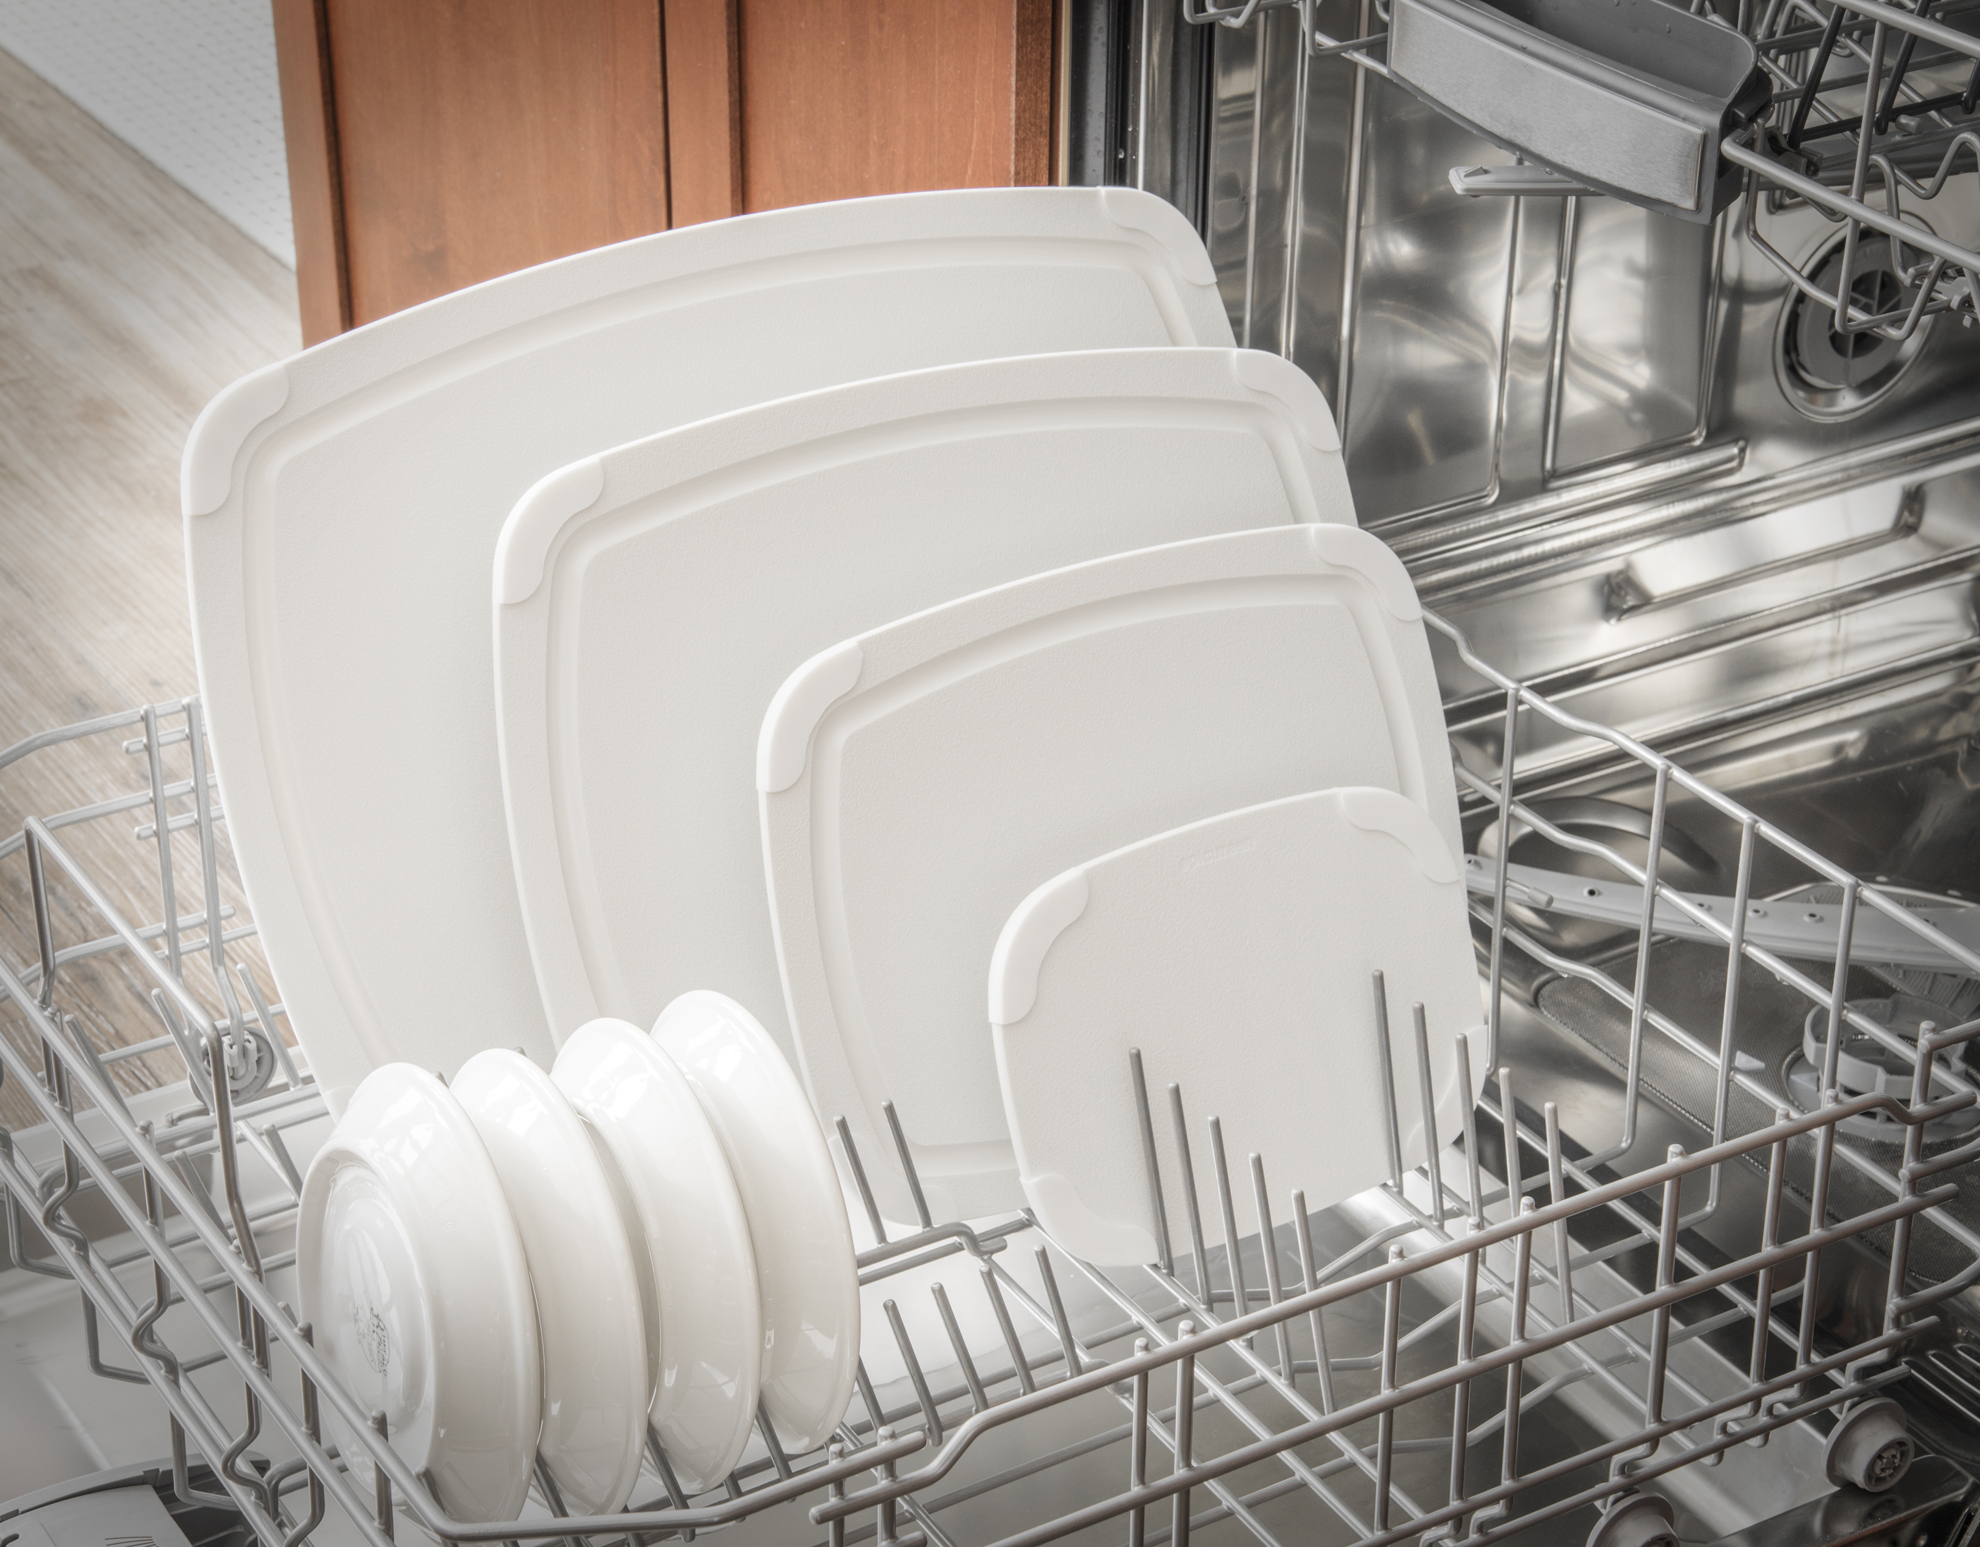 ecooks-image3-cutting board poly series-white dishwasher